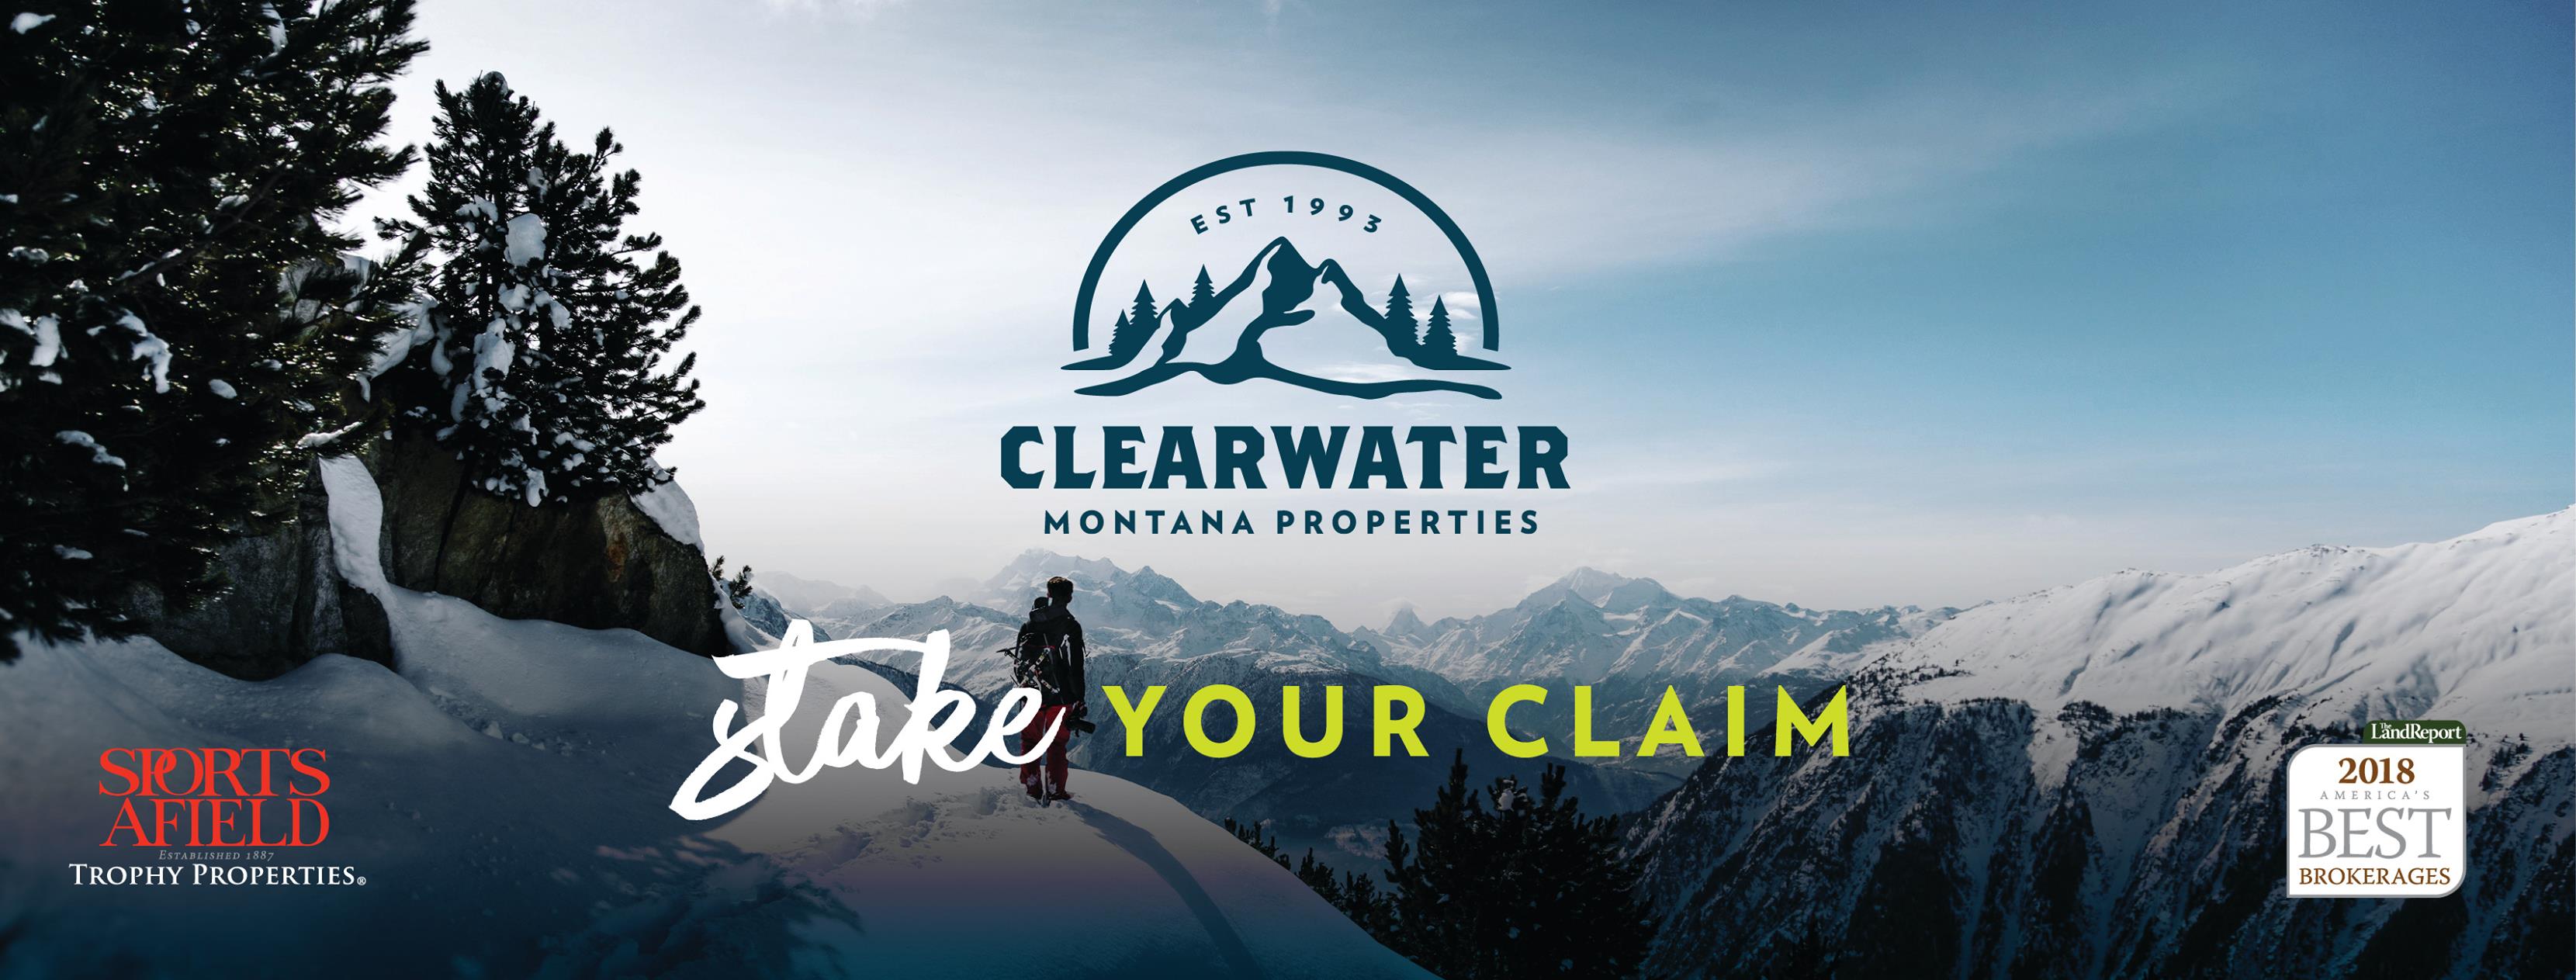 Clearwater Montana Properties - Helena